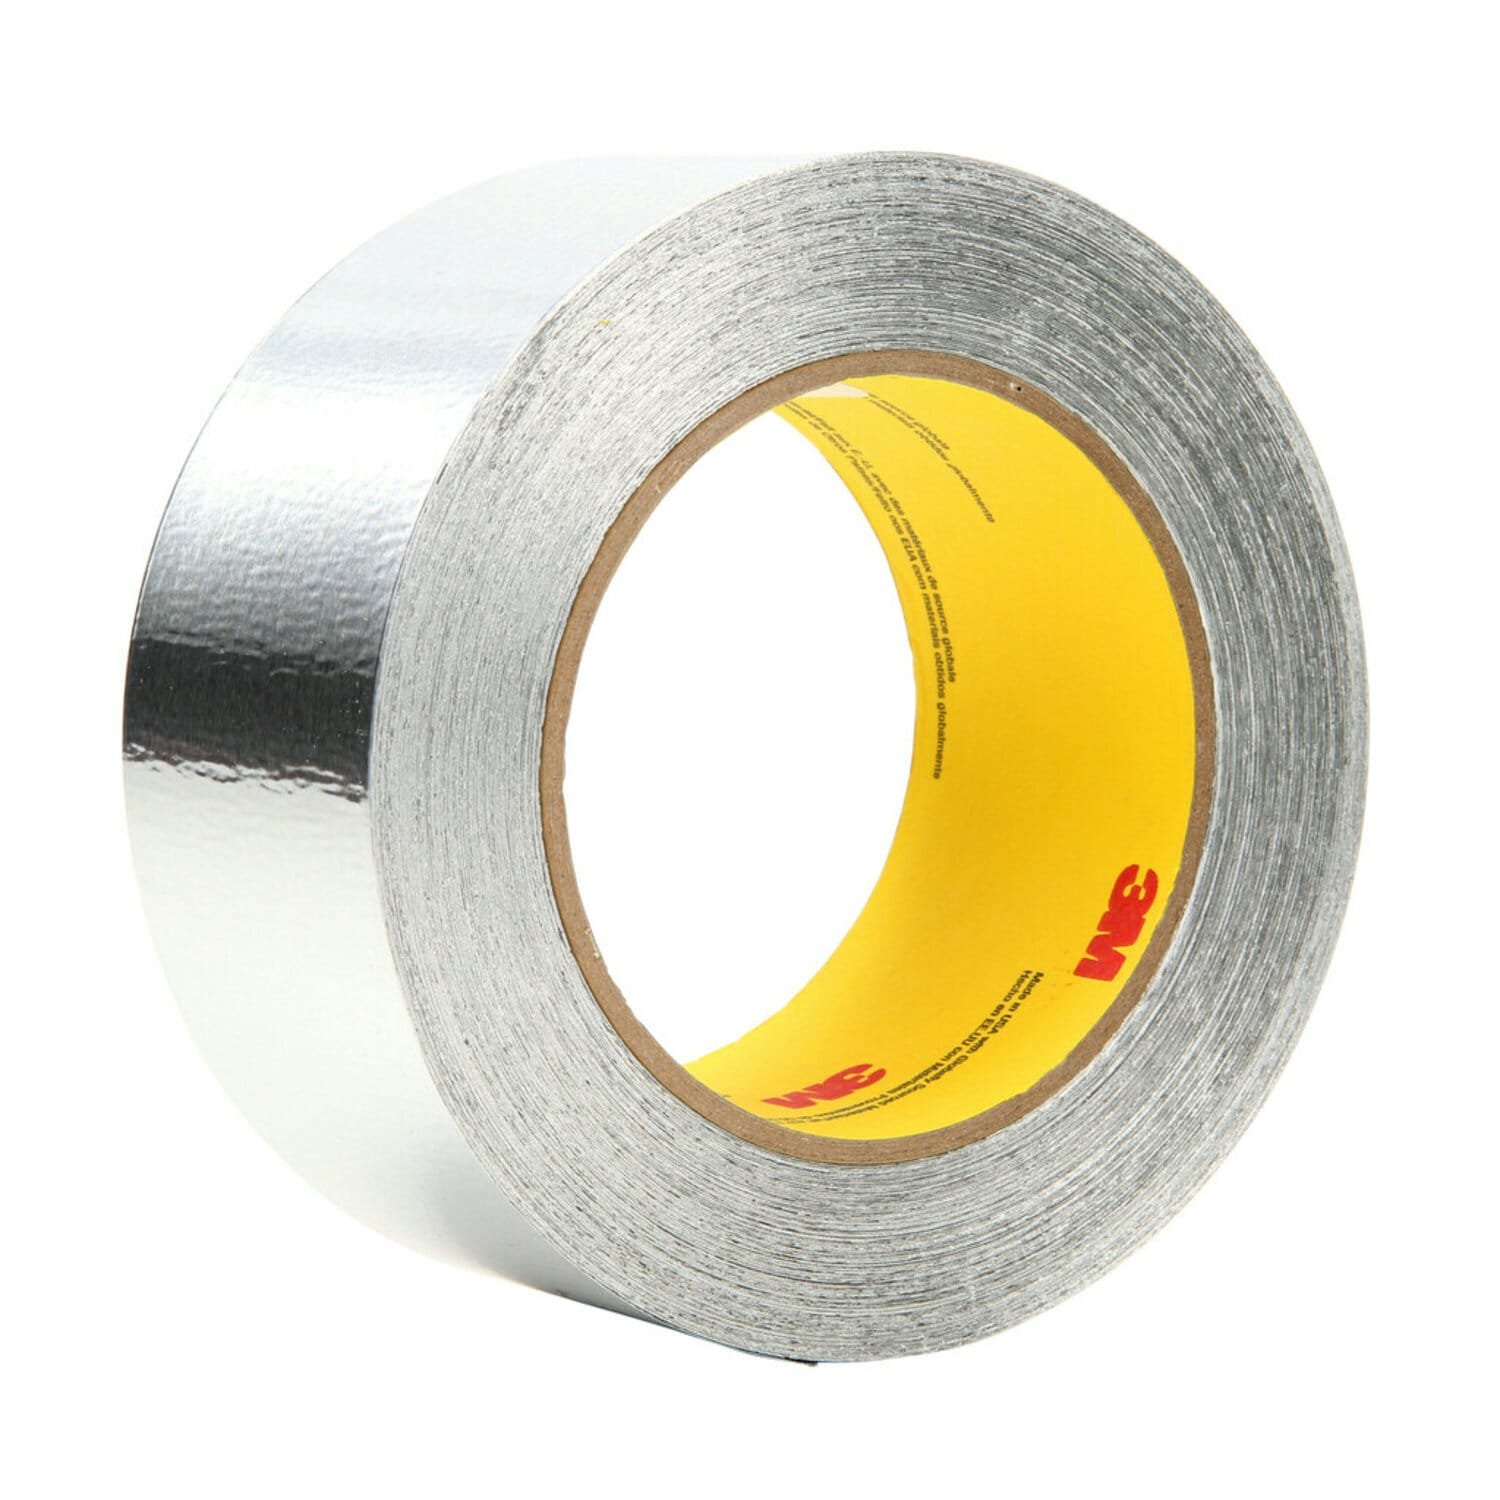 7100053641 - 3M Aluminum Foil Tape 425, Silver, 50 mm x 10 m, 4.6 mil, 24 rolls per
case